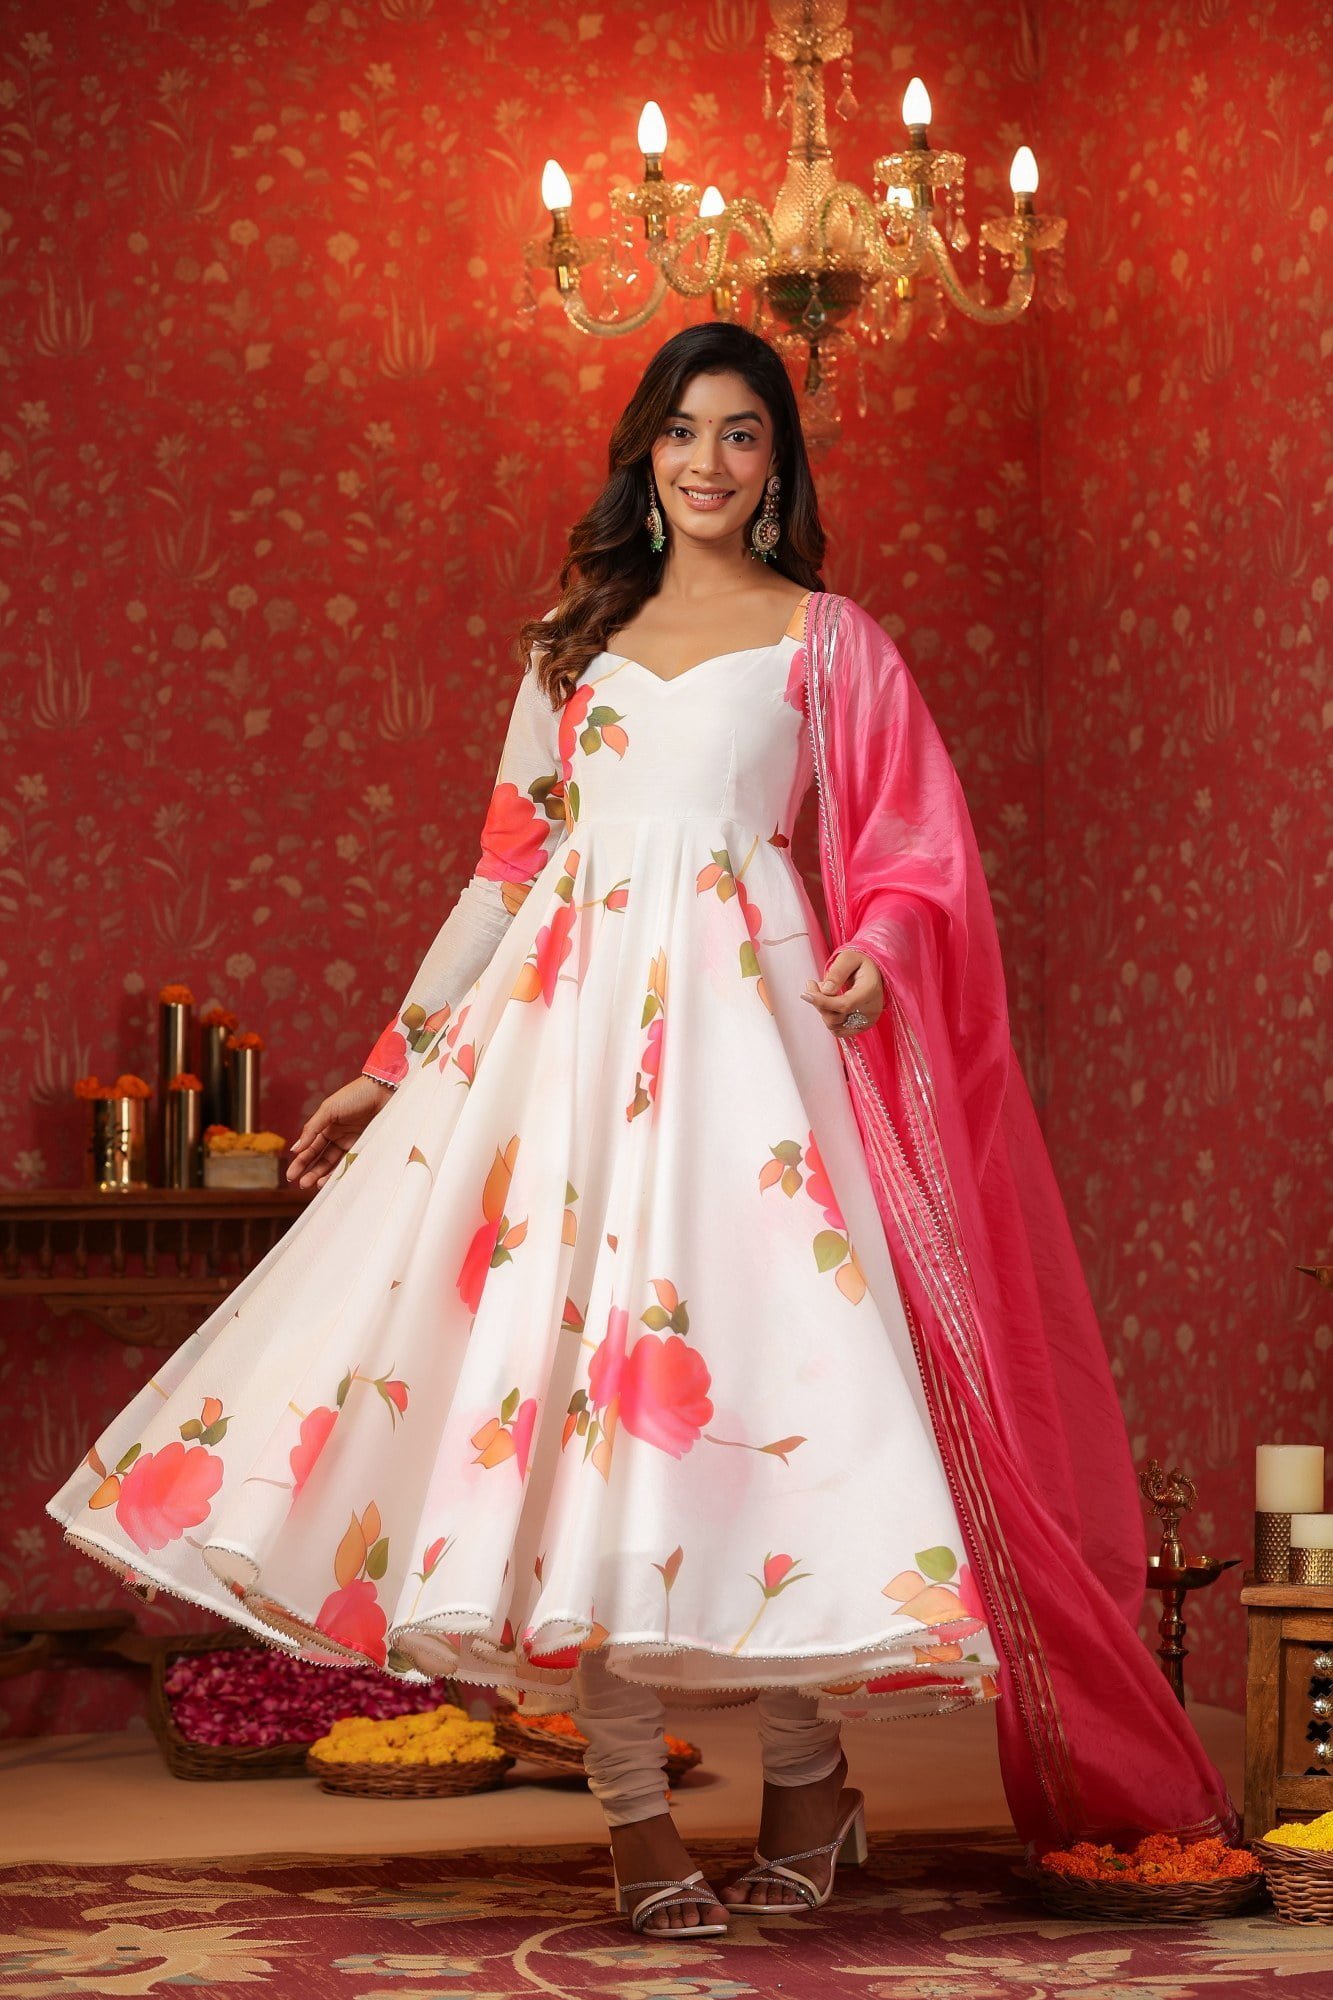 Wedding Wear Anarkali Suit Mexi Dress Gown Indian Ethnic Designer Salwar  kameez | eBay